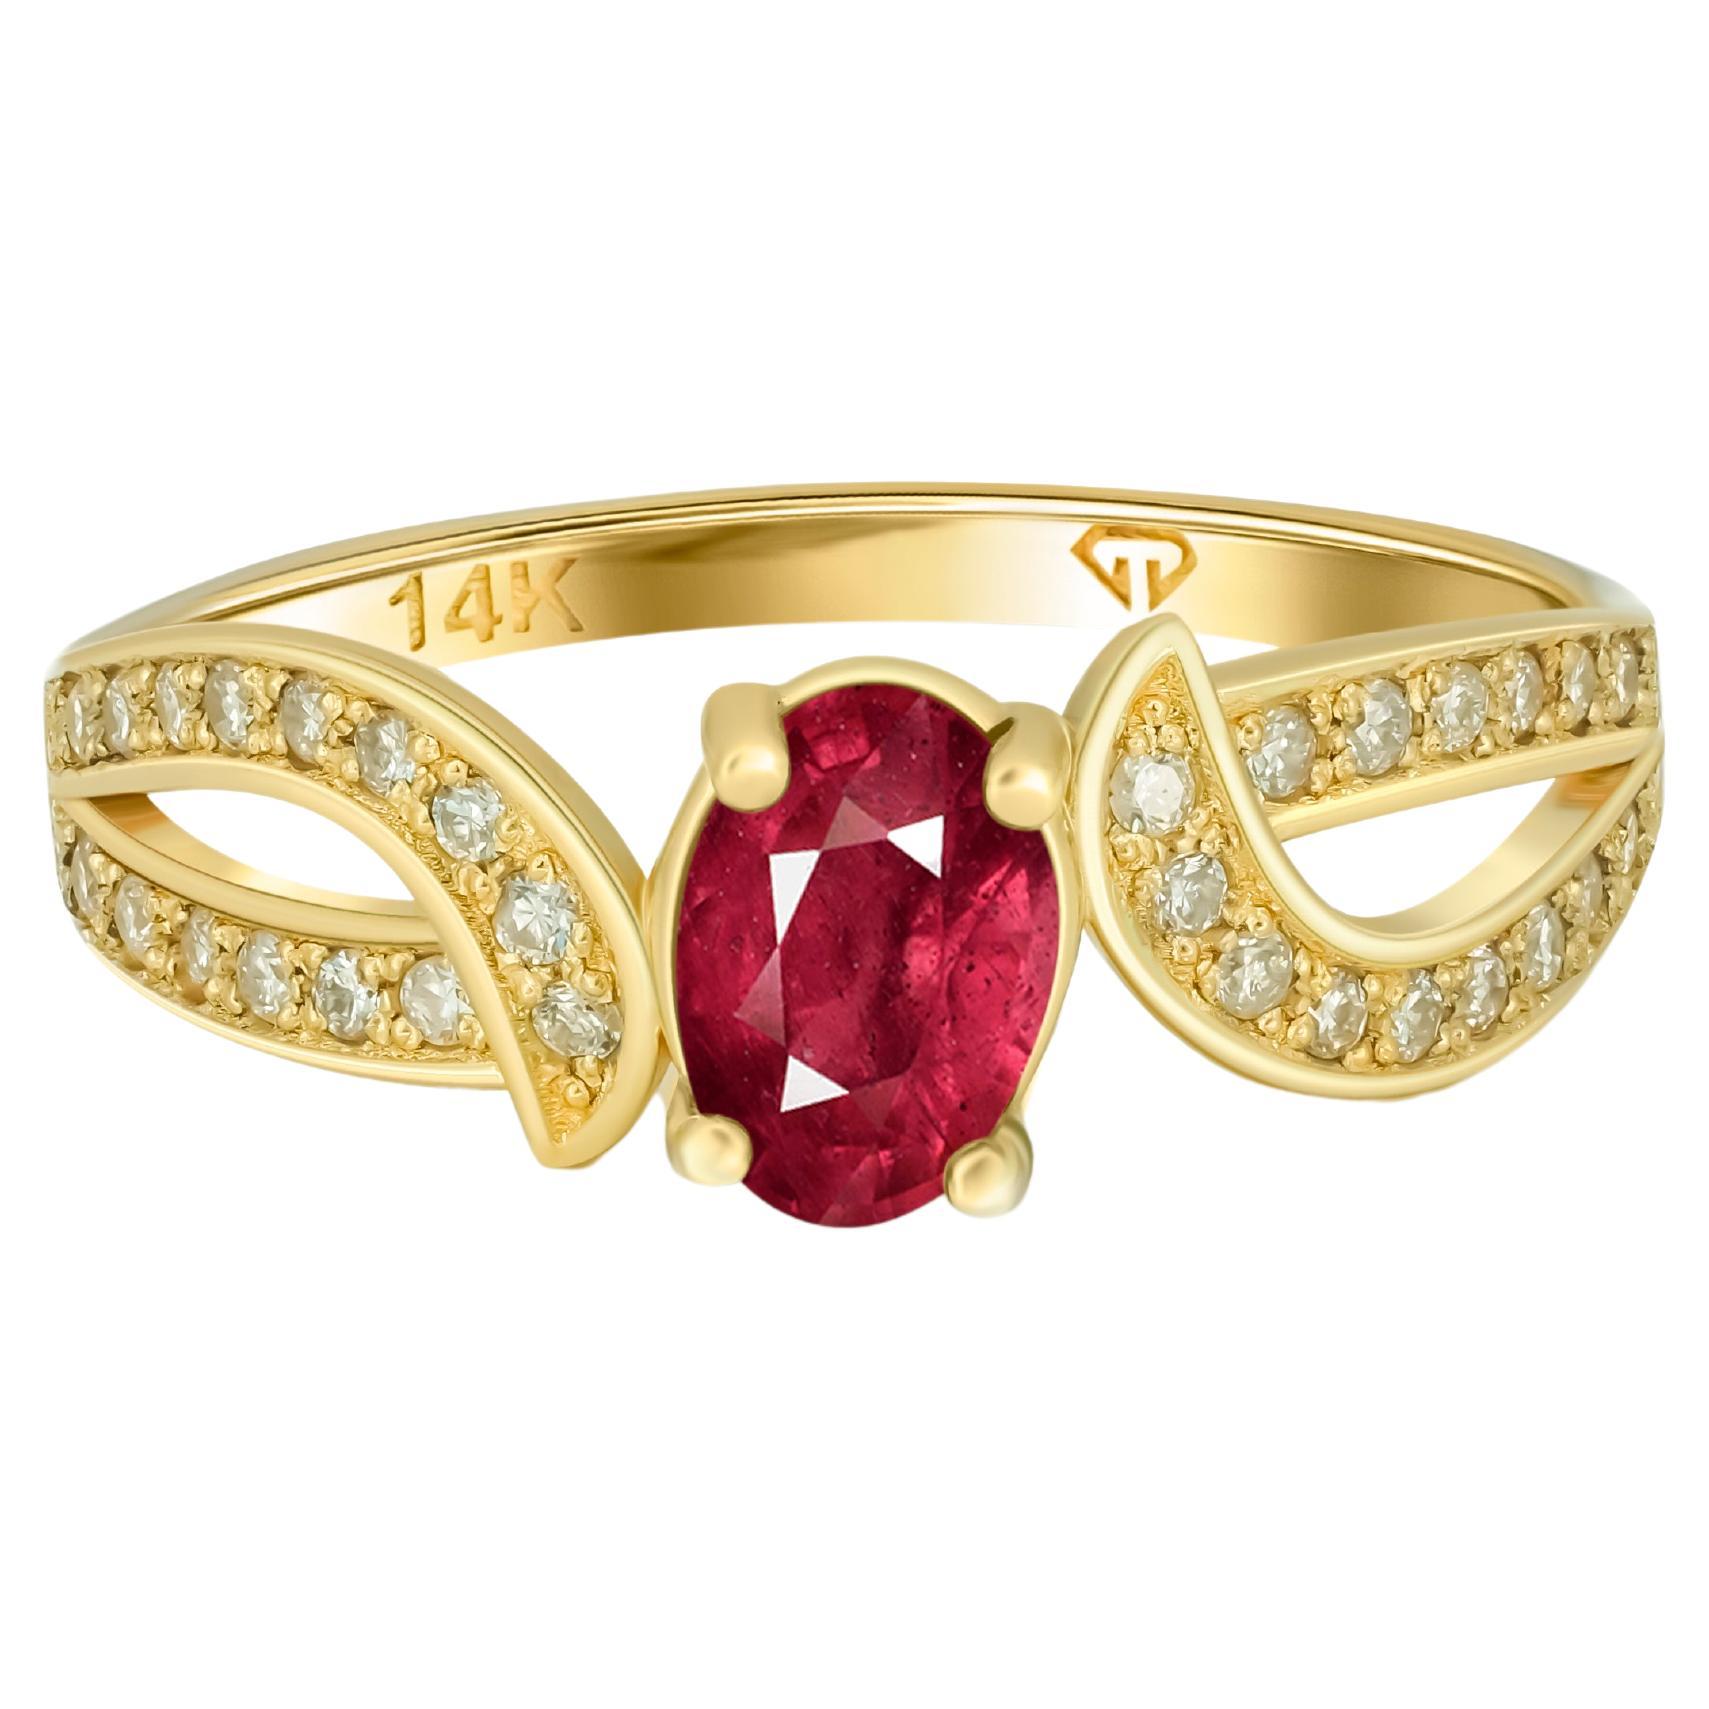 Genuine ruby 14k gold ring. 